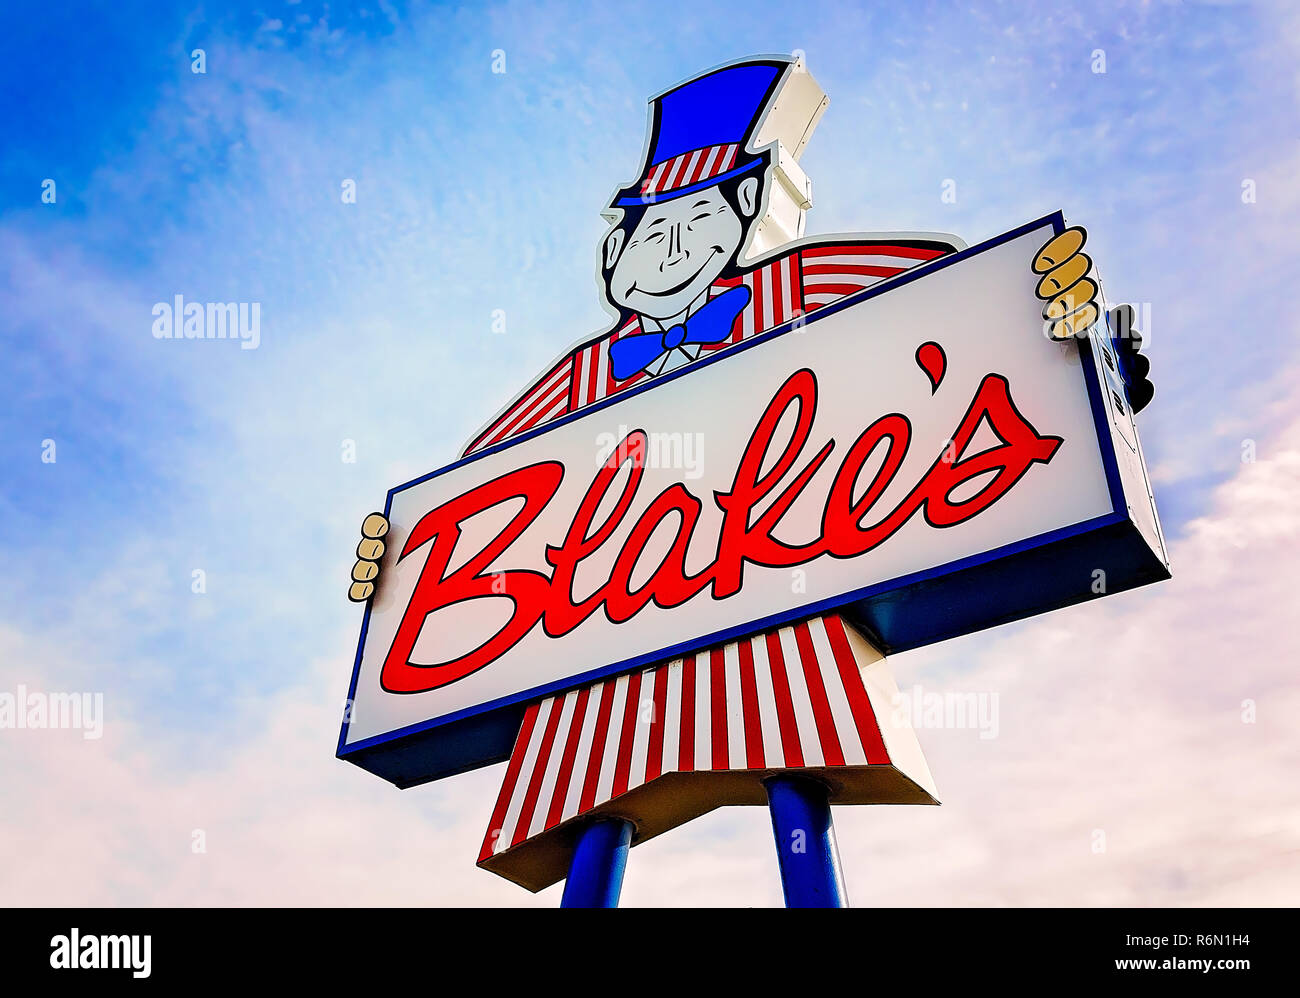 Blakes lotaburger hi-res stock photography and images - Alamy